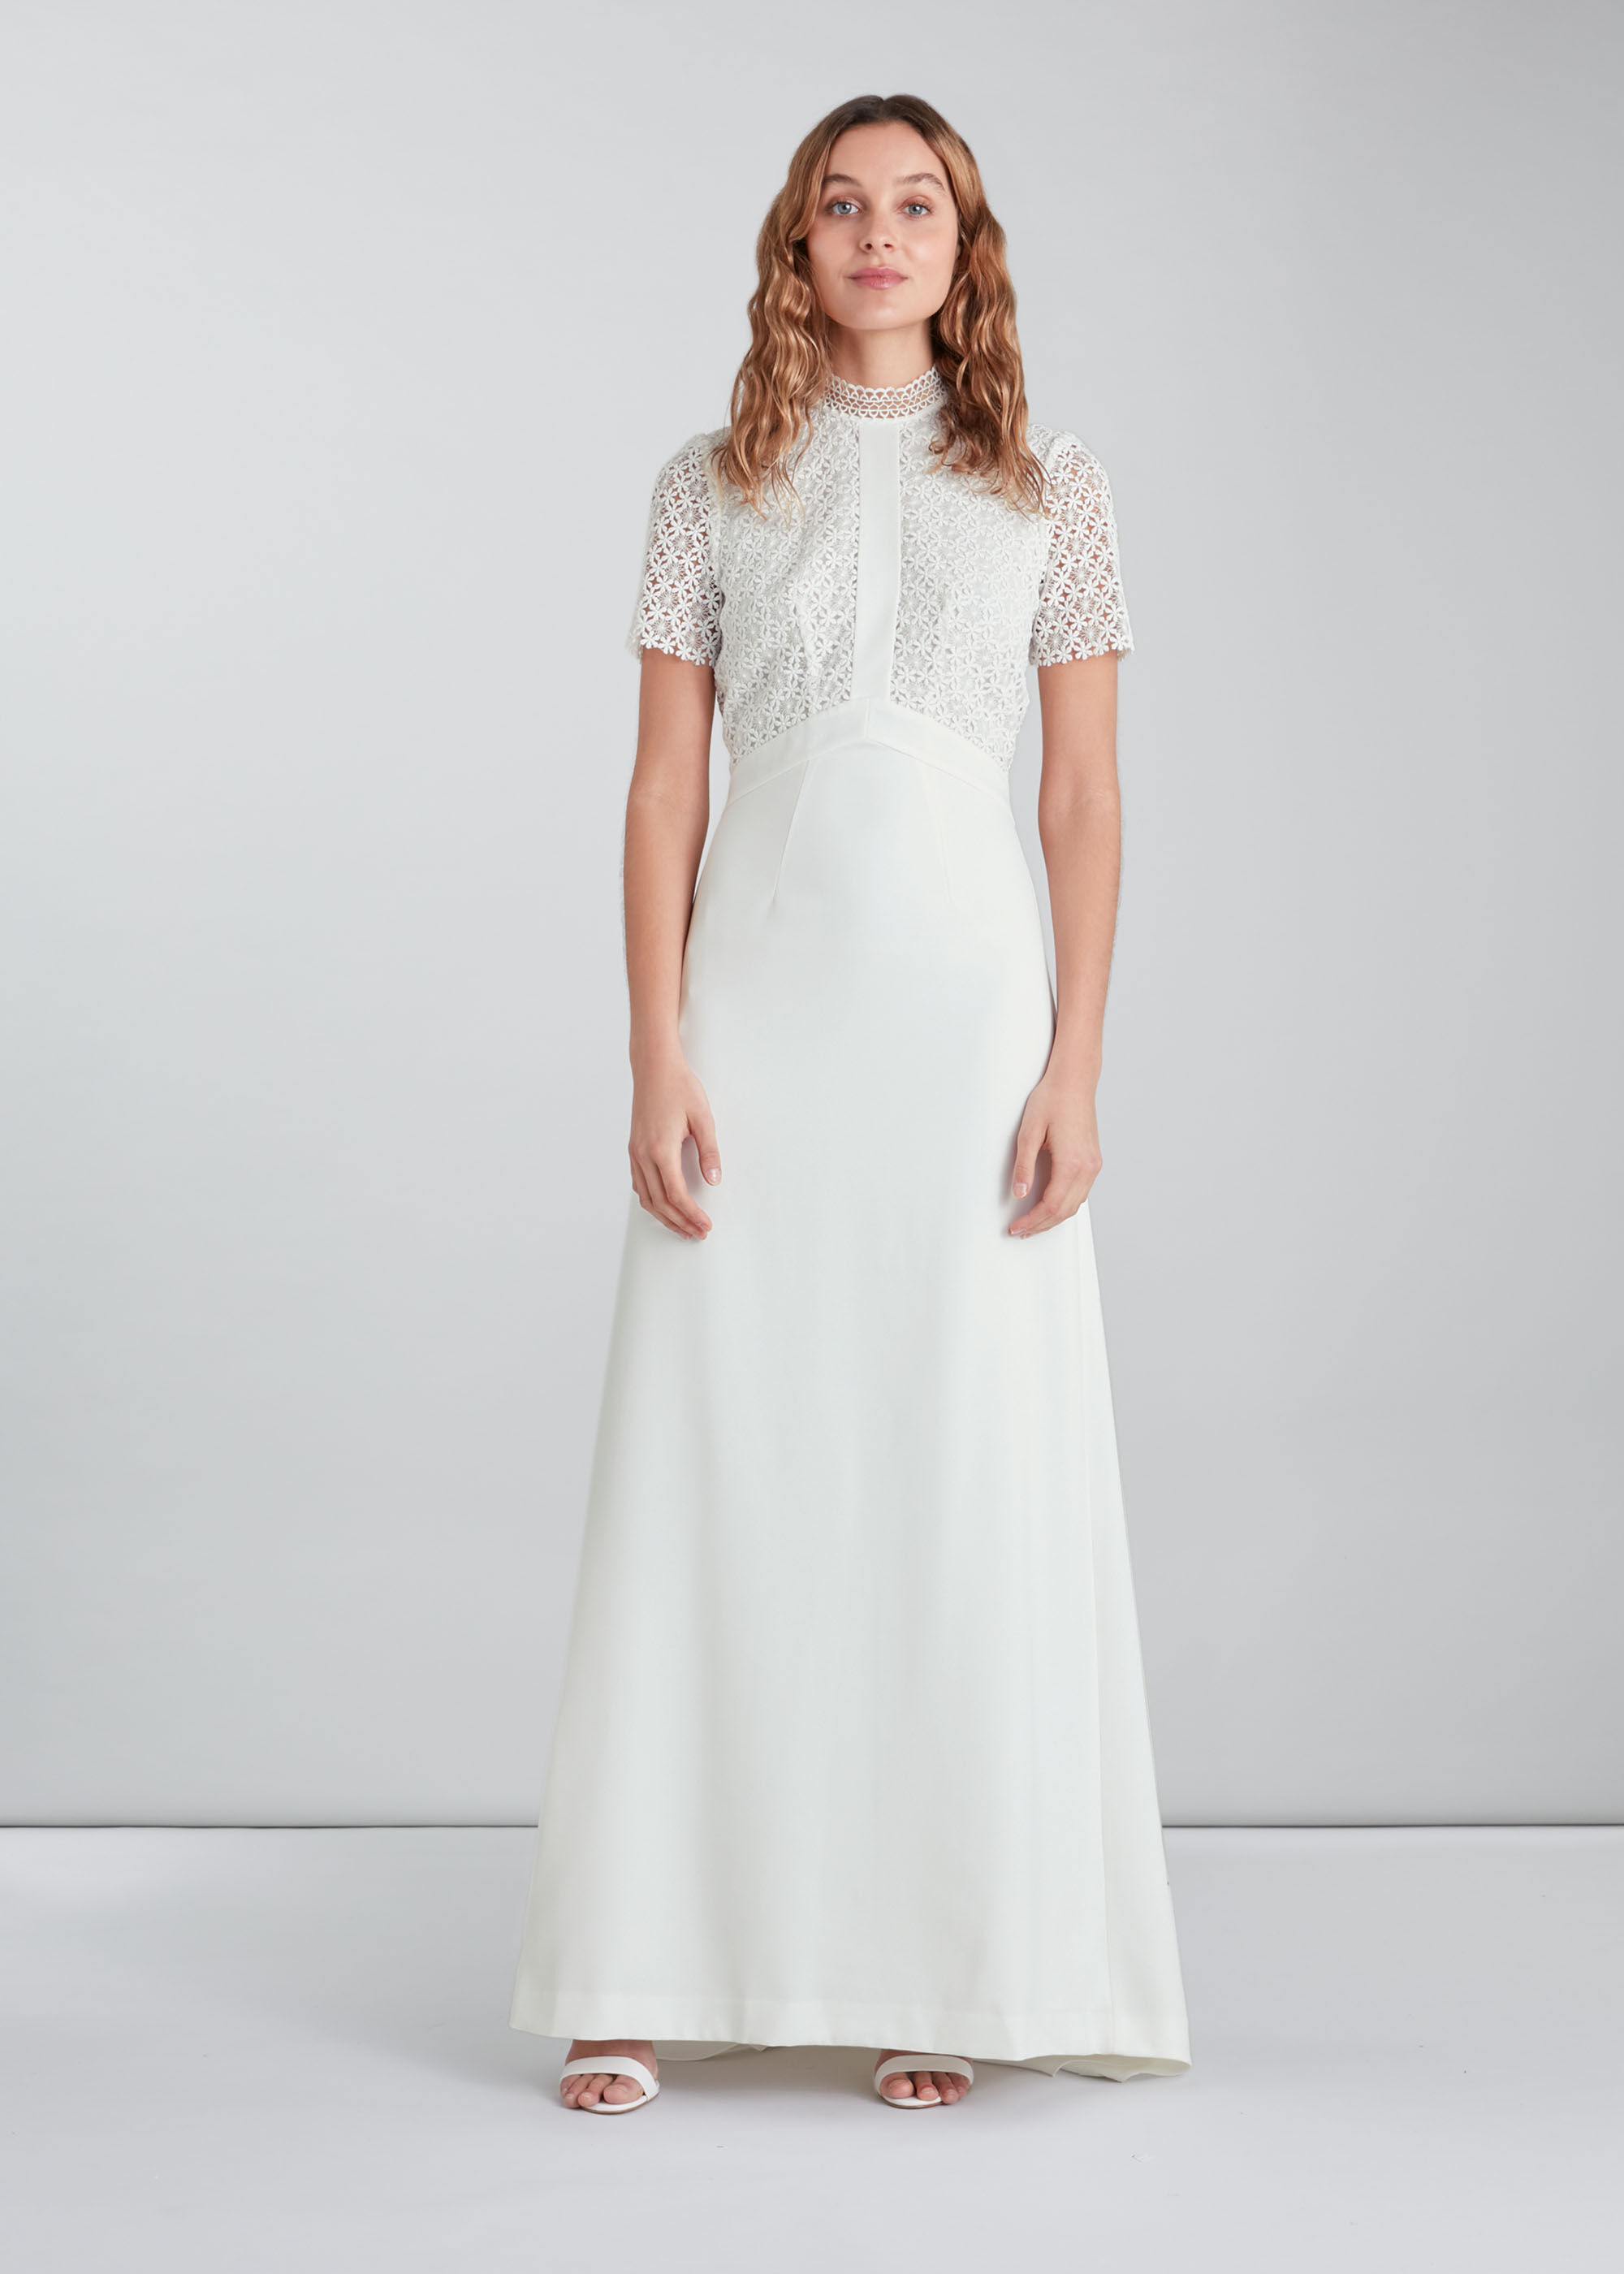 Ivory Clementine Wedding Dress ...